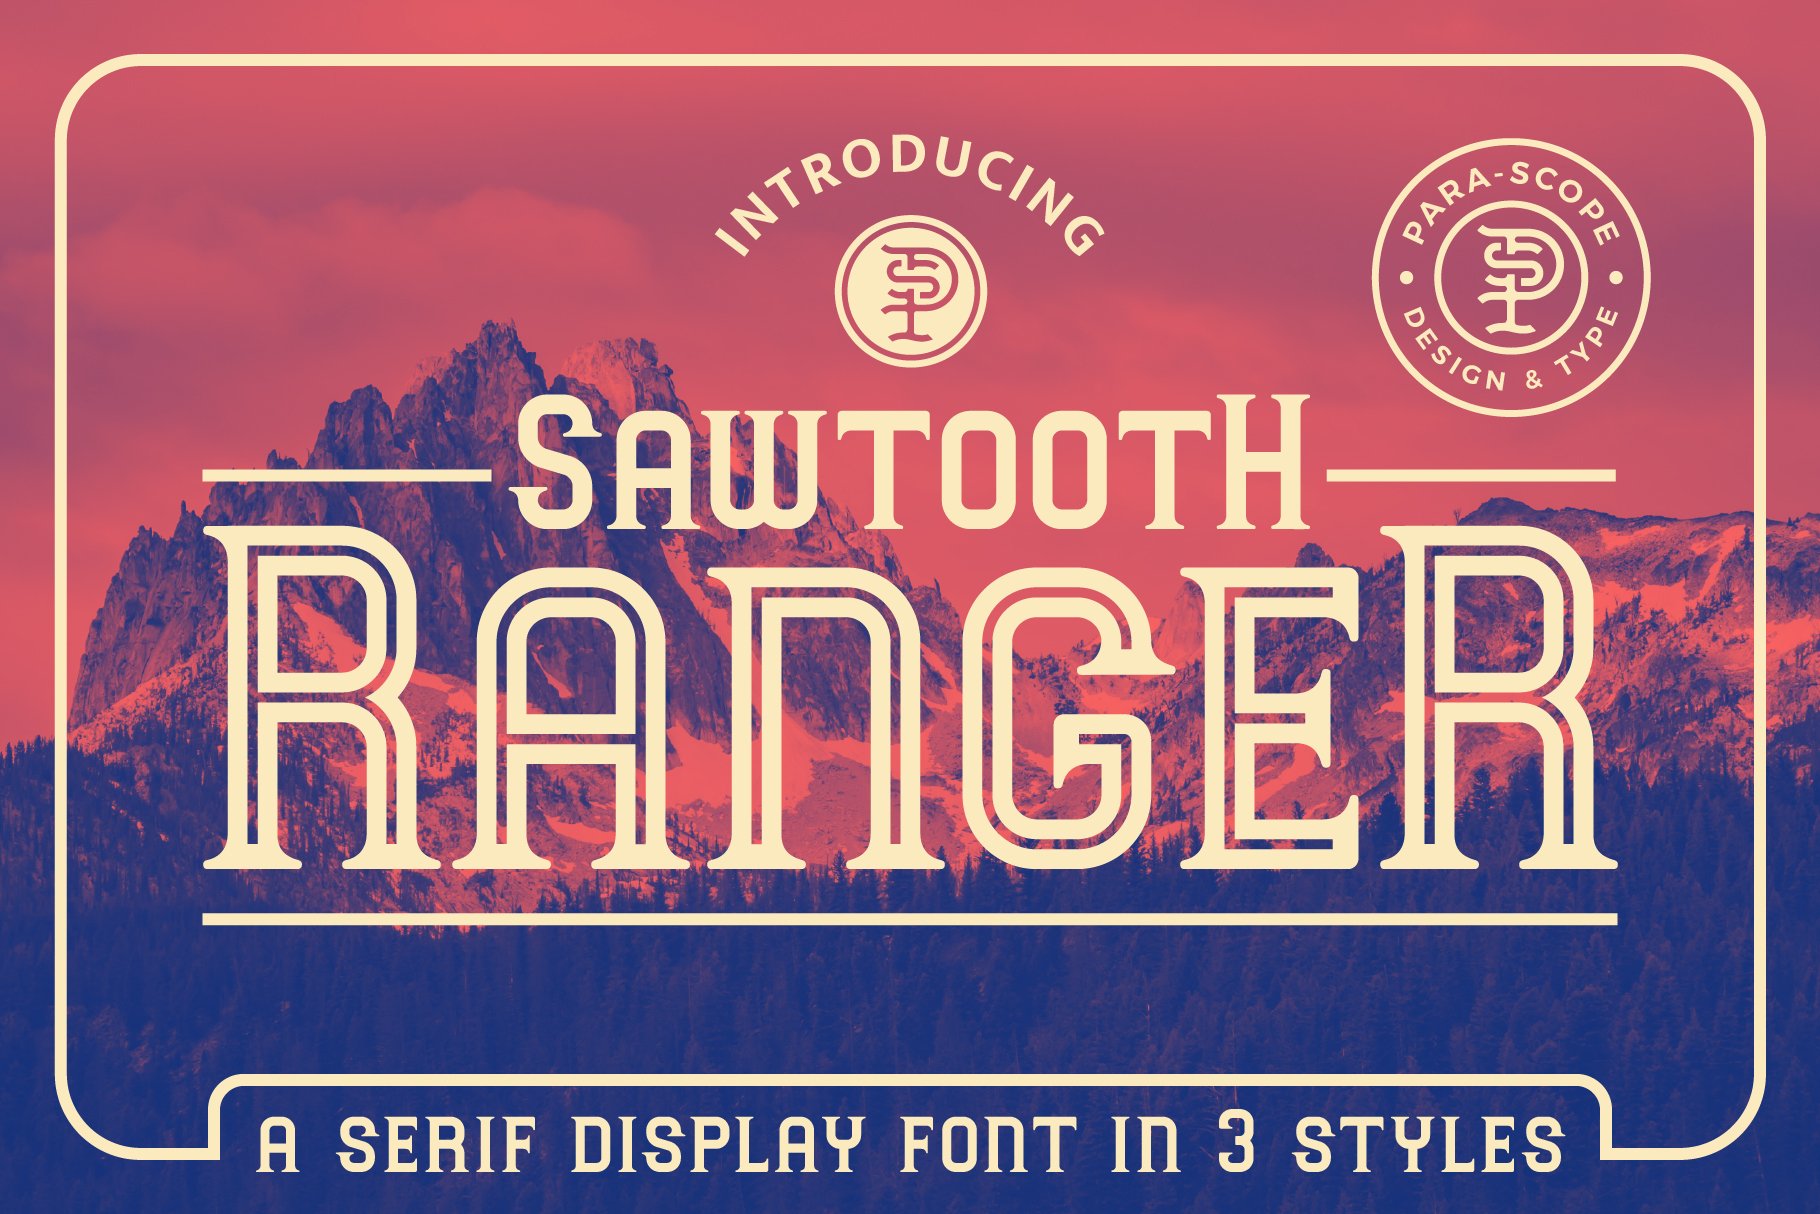 Sawtooth Ranger - Serif Display Font cover image.